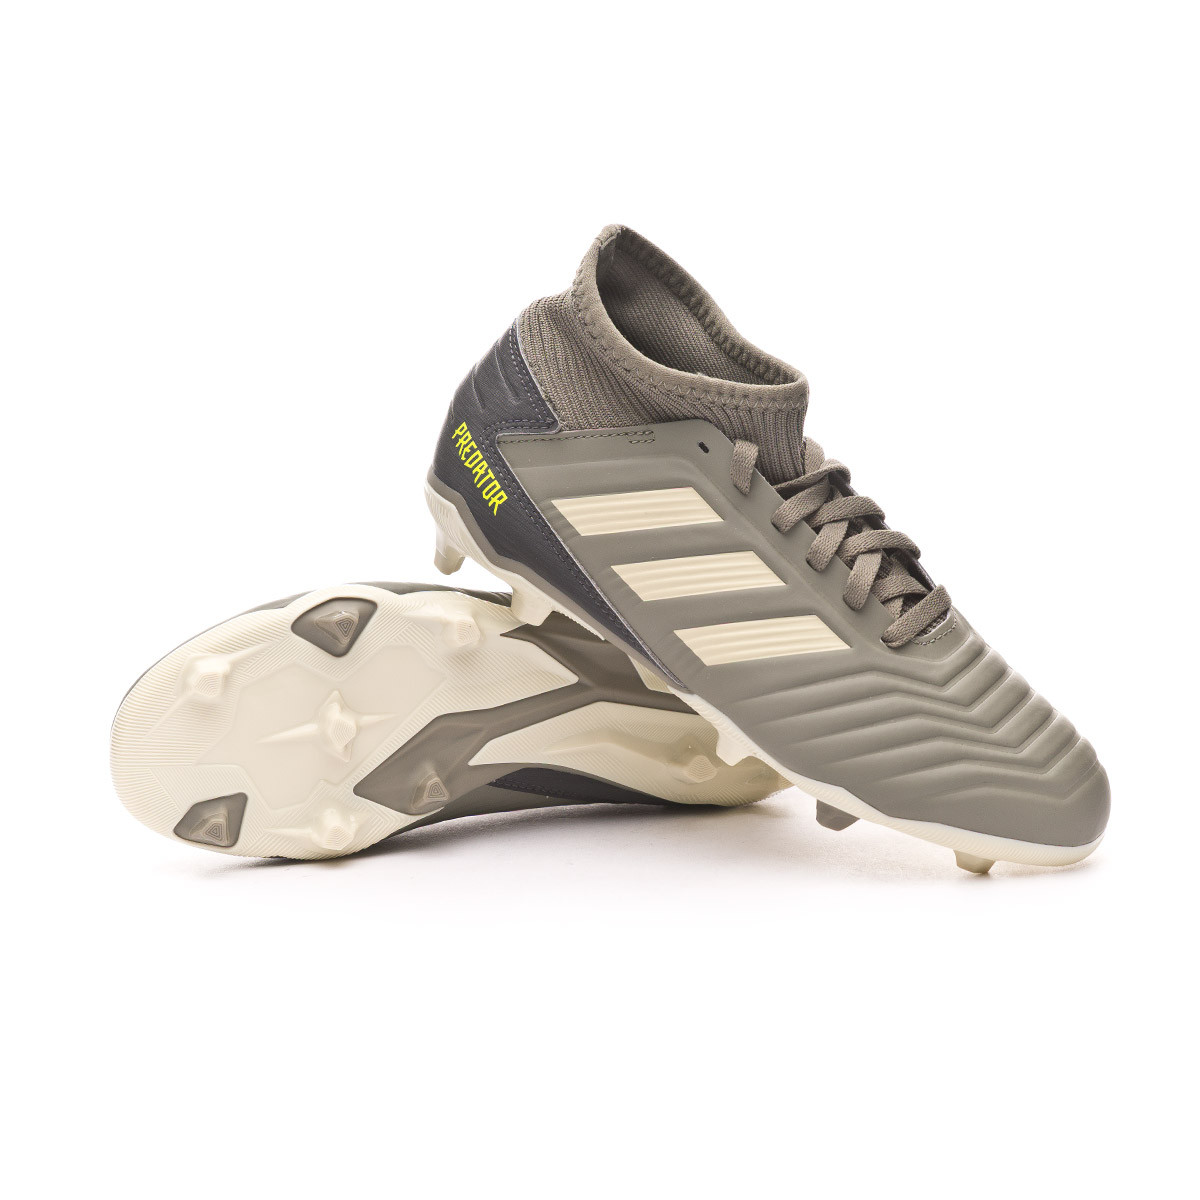 Football Boots adidas Predator 19.3 FG 